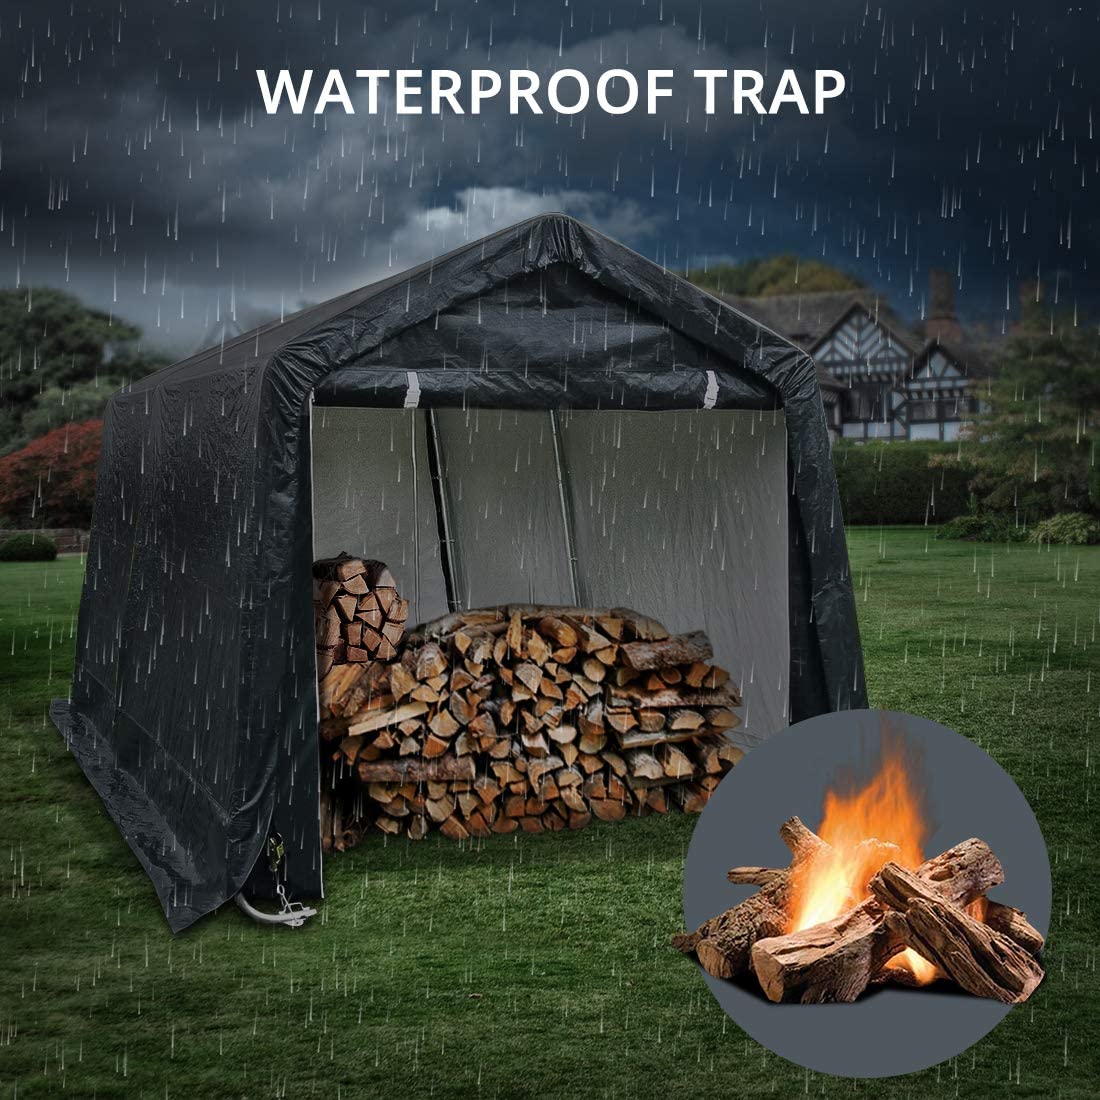 8x8 portable garage Waterproof trap